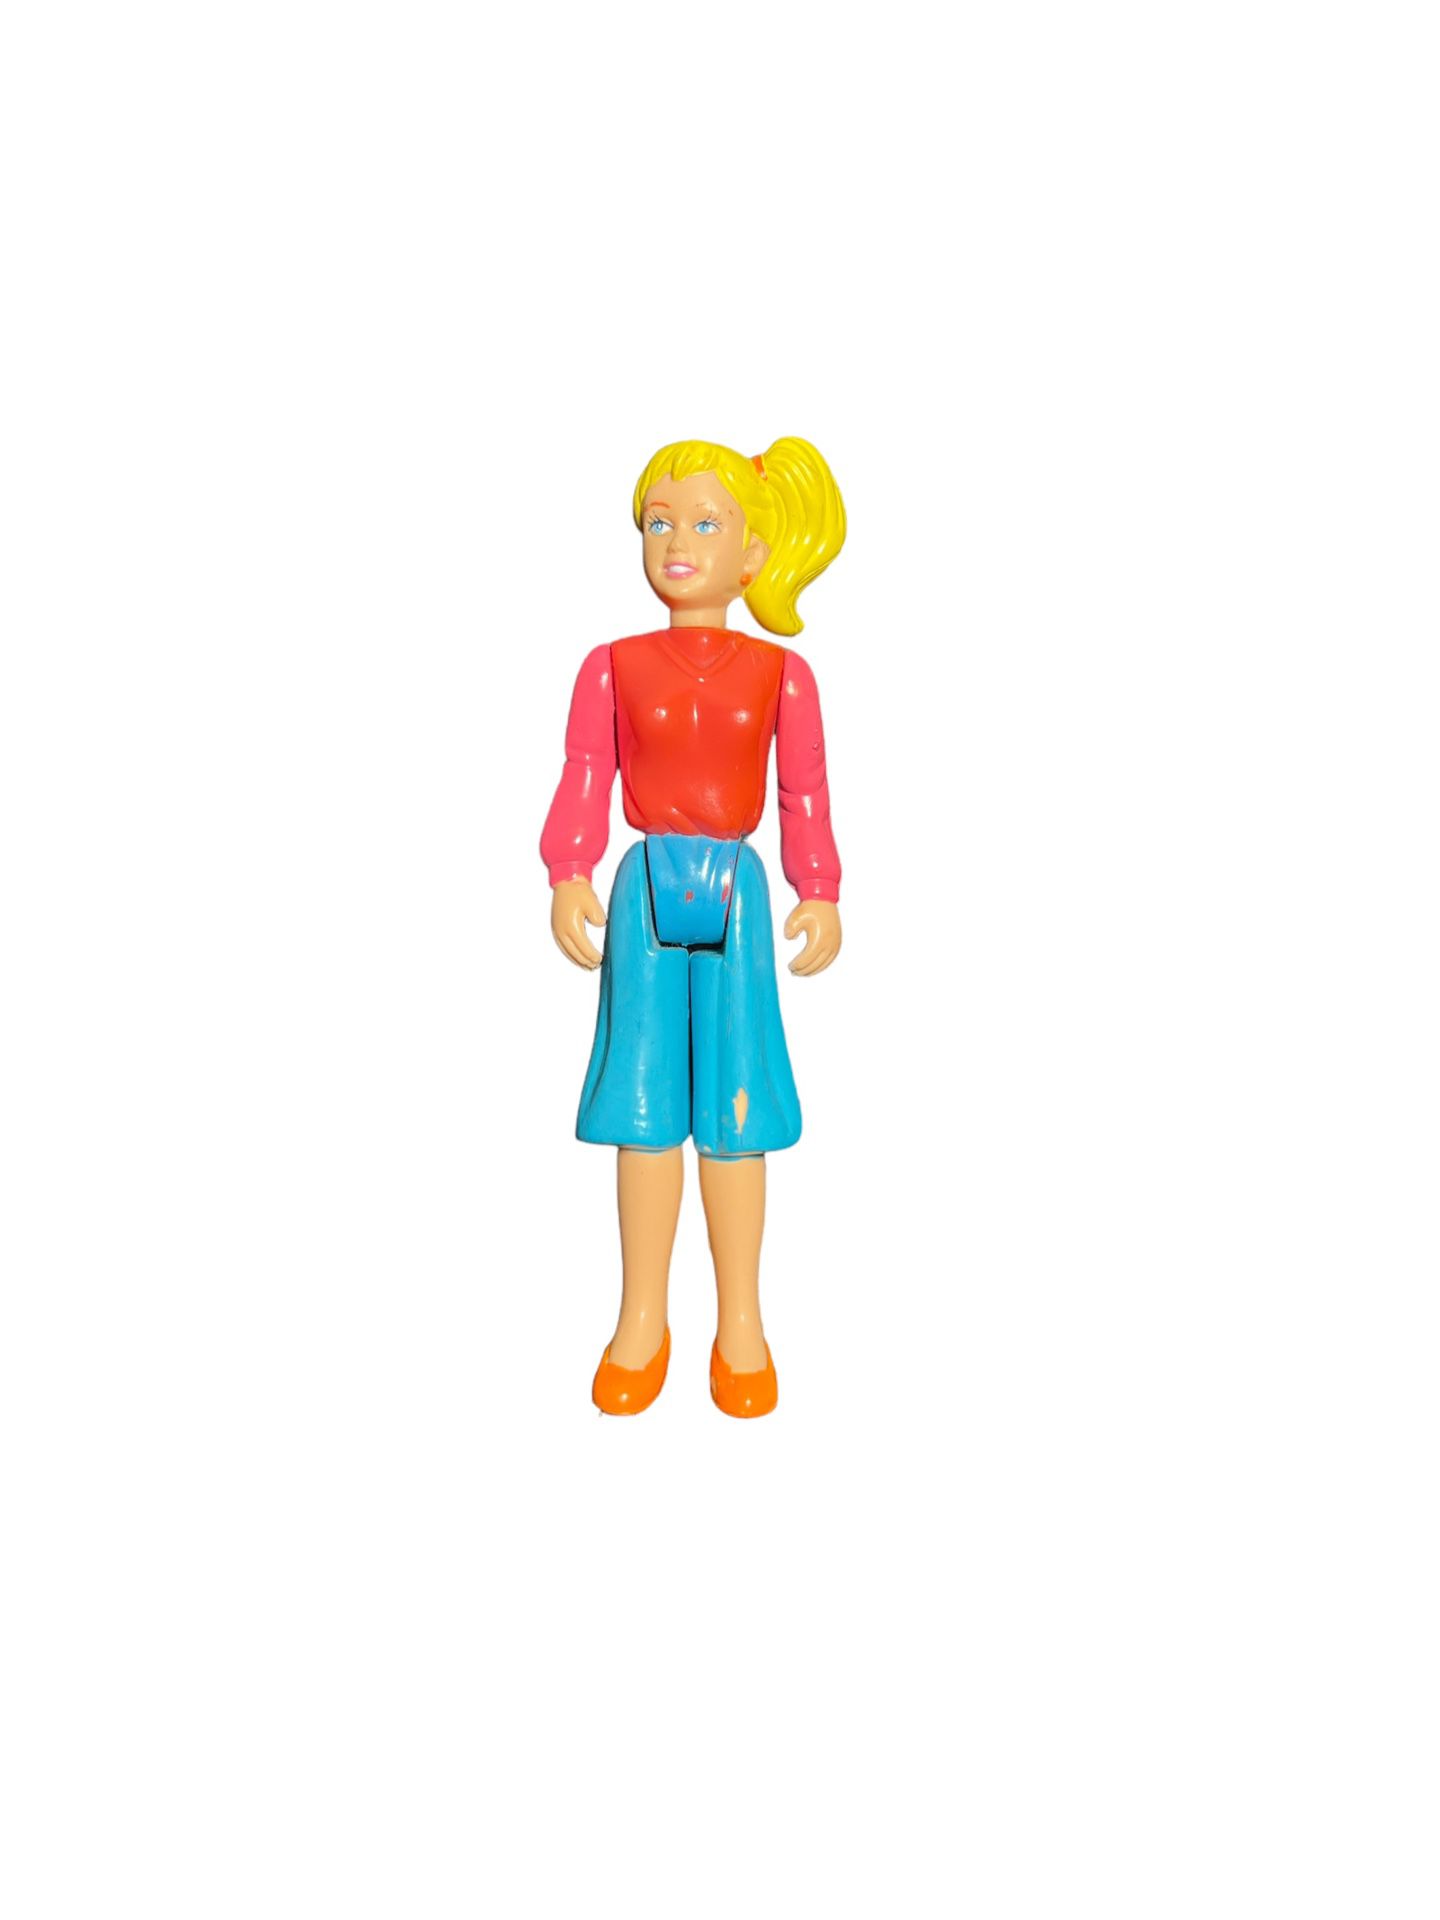 M.A.L. Dollhouse Teen Girl Doll Figure